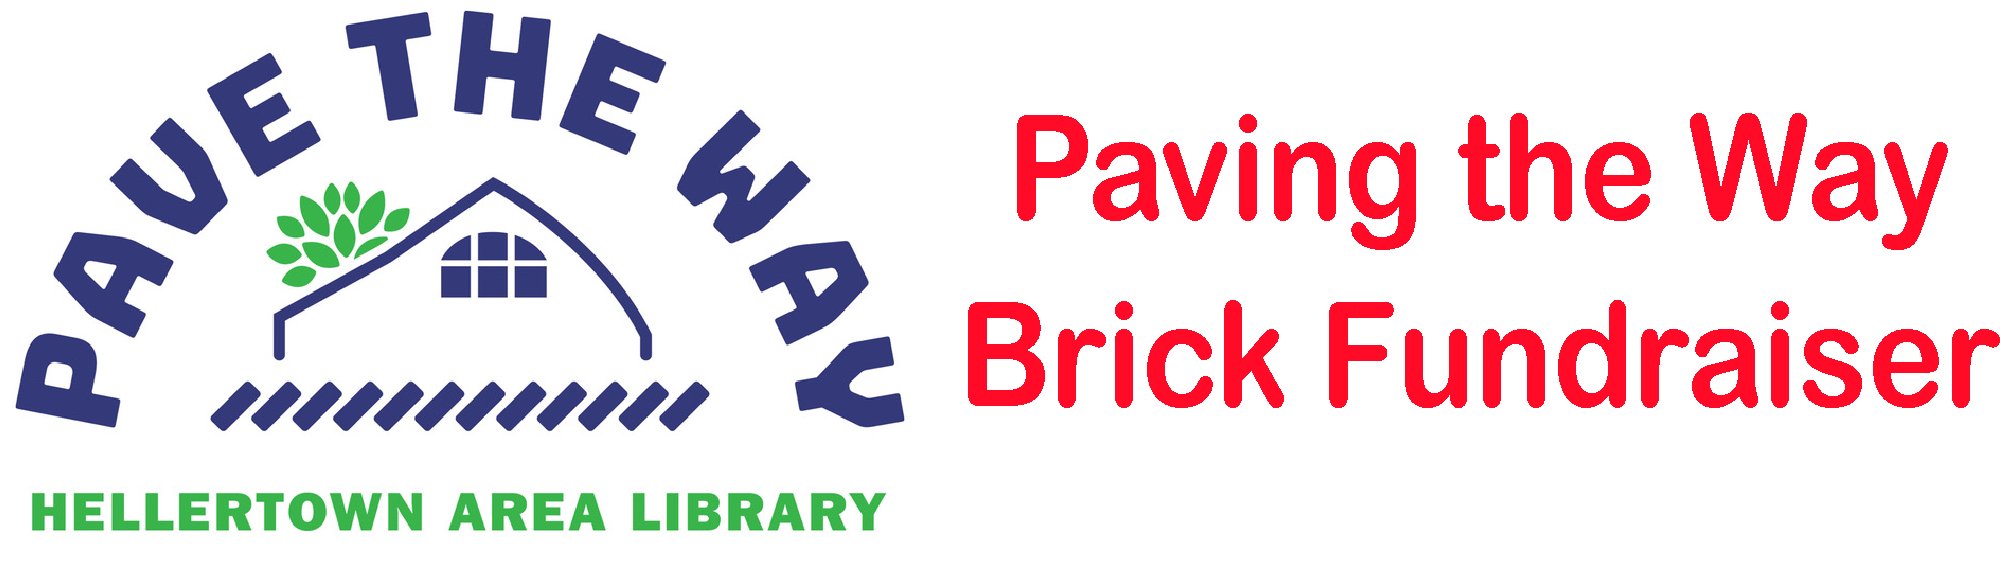 Hellertown Area Library Brick Fundraiser